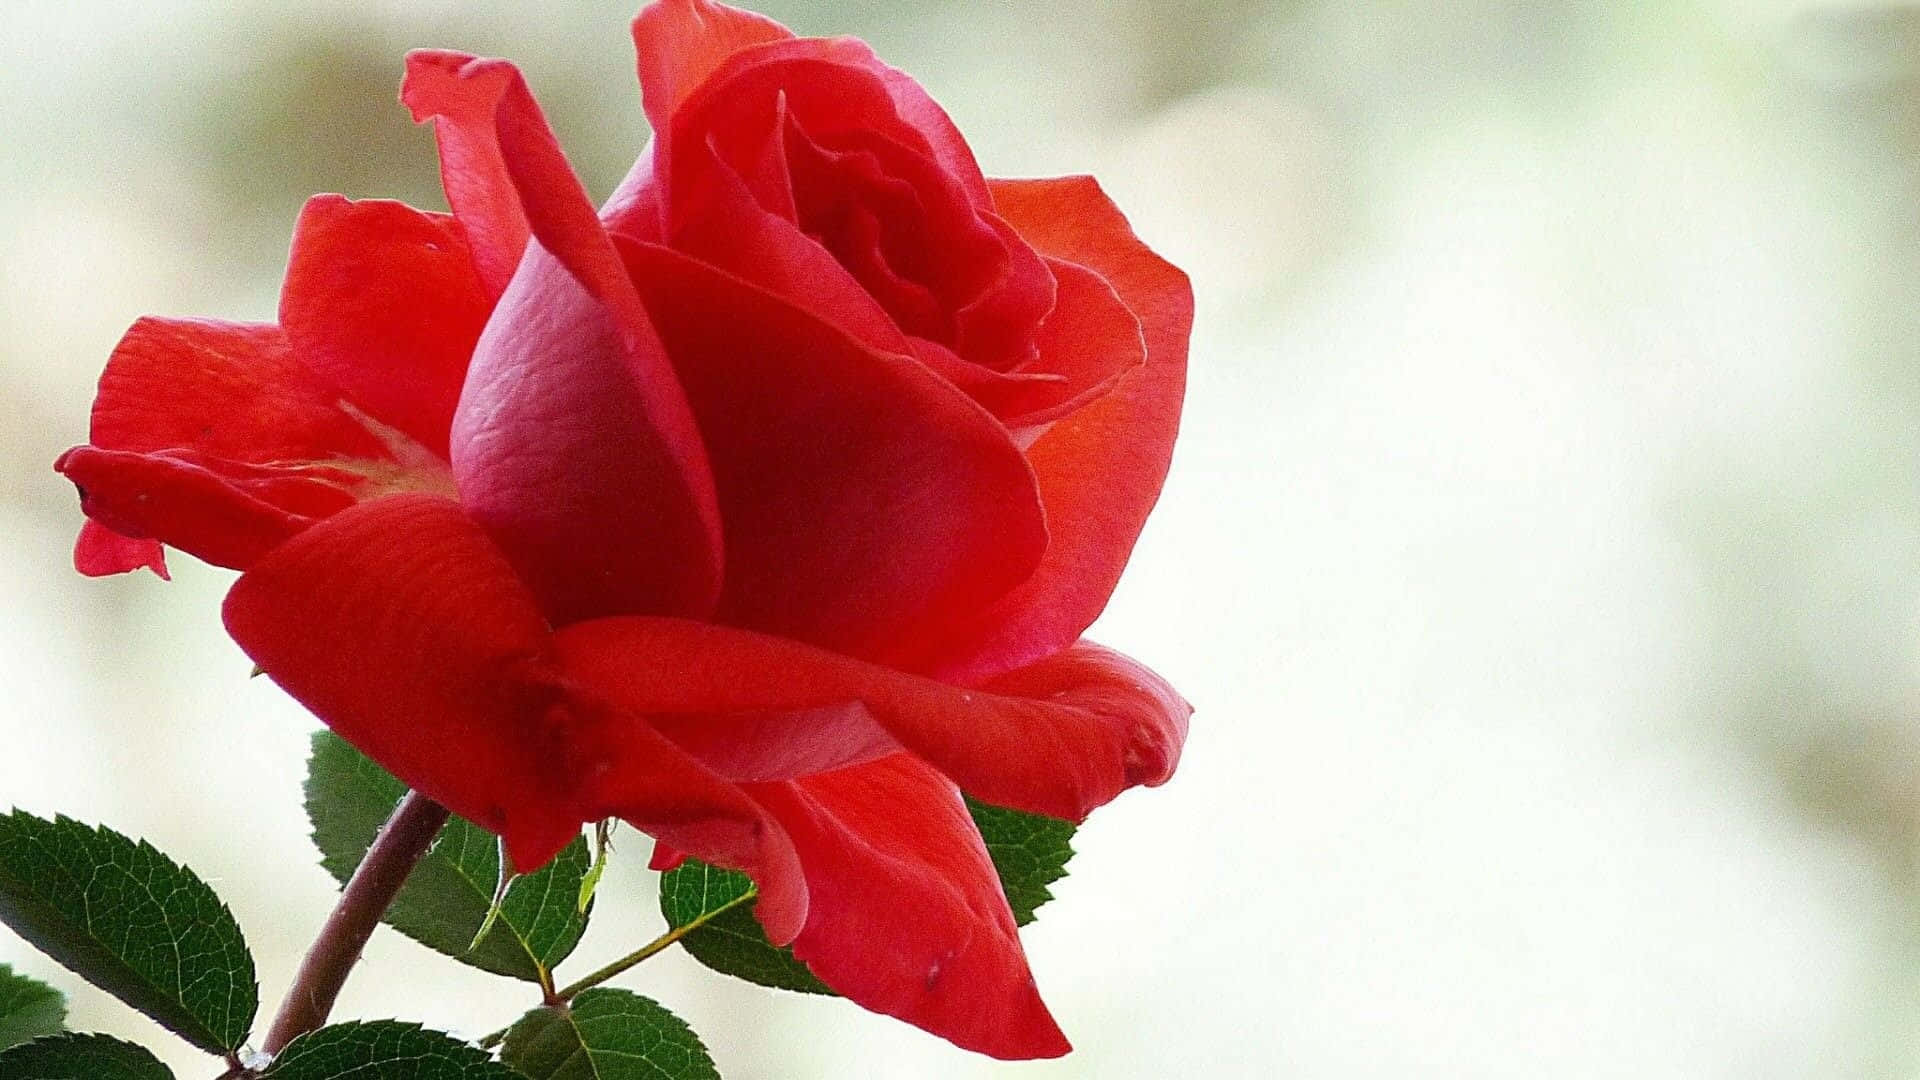 A beautiful pink rose in close-up